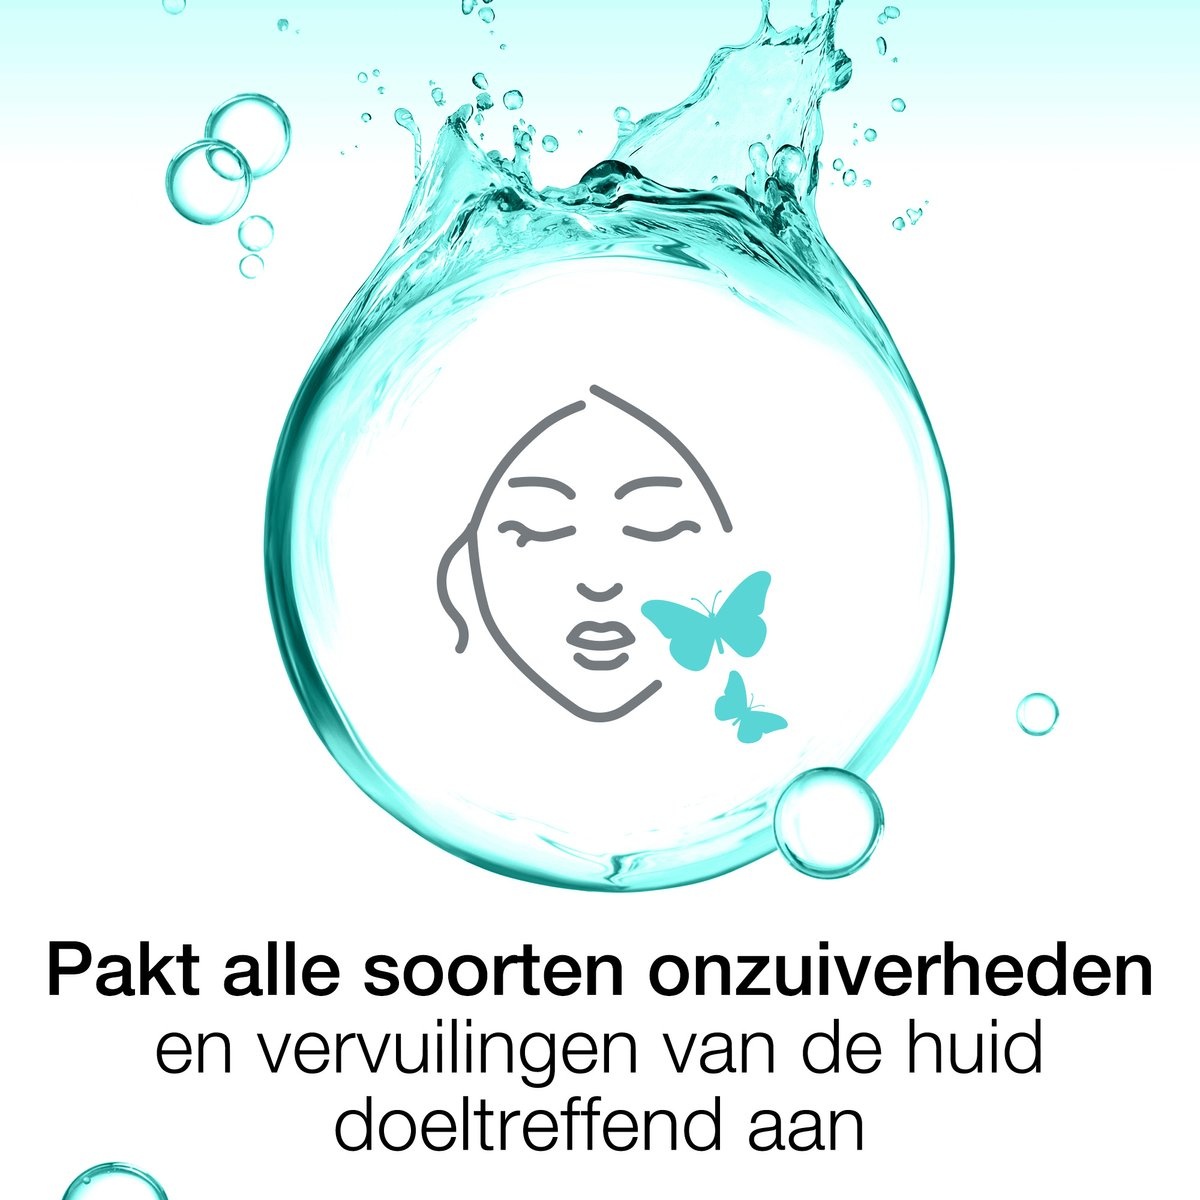 Neutrogena® Deep Clean 3-in-1 Micellar Water - 400 ml